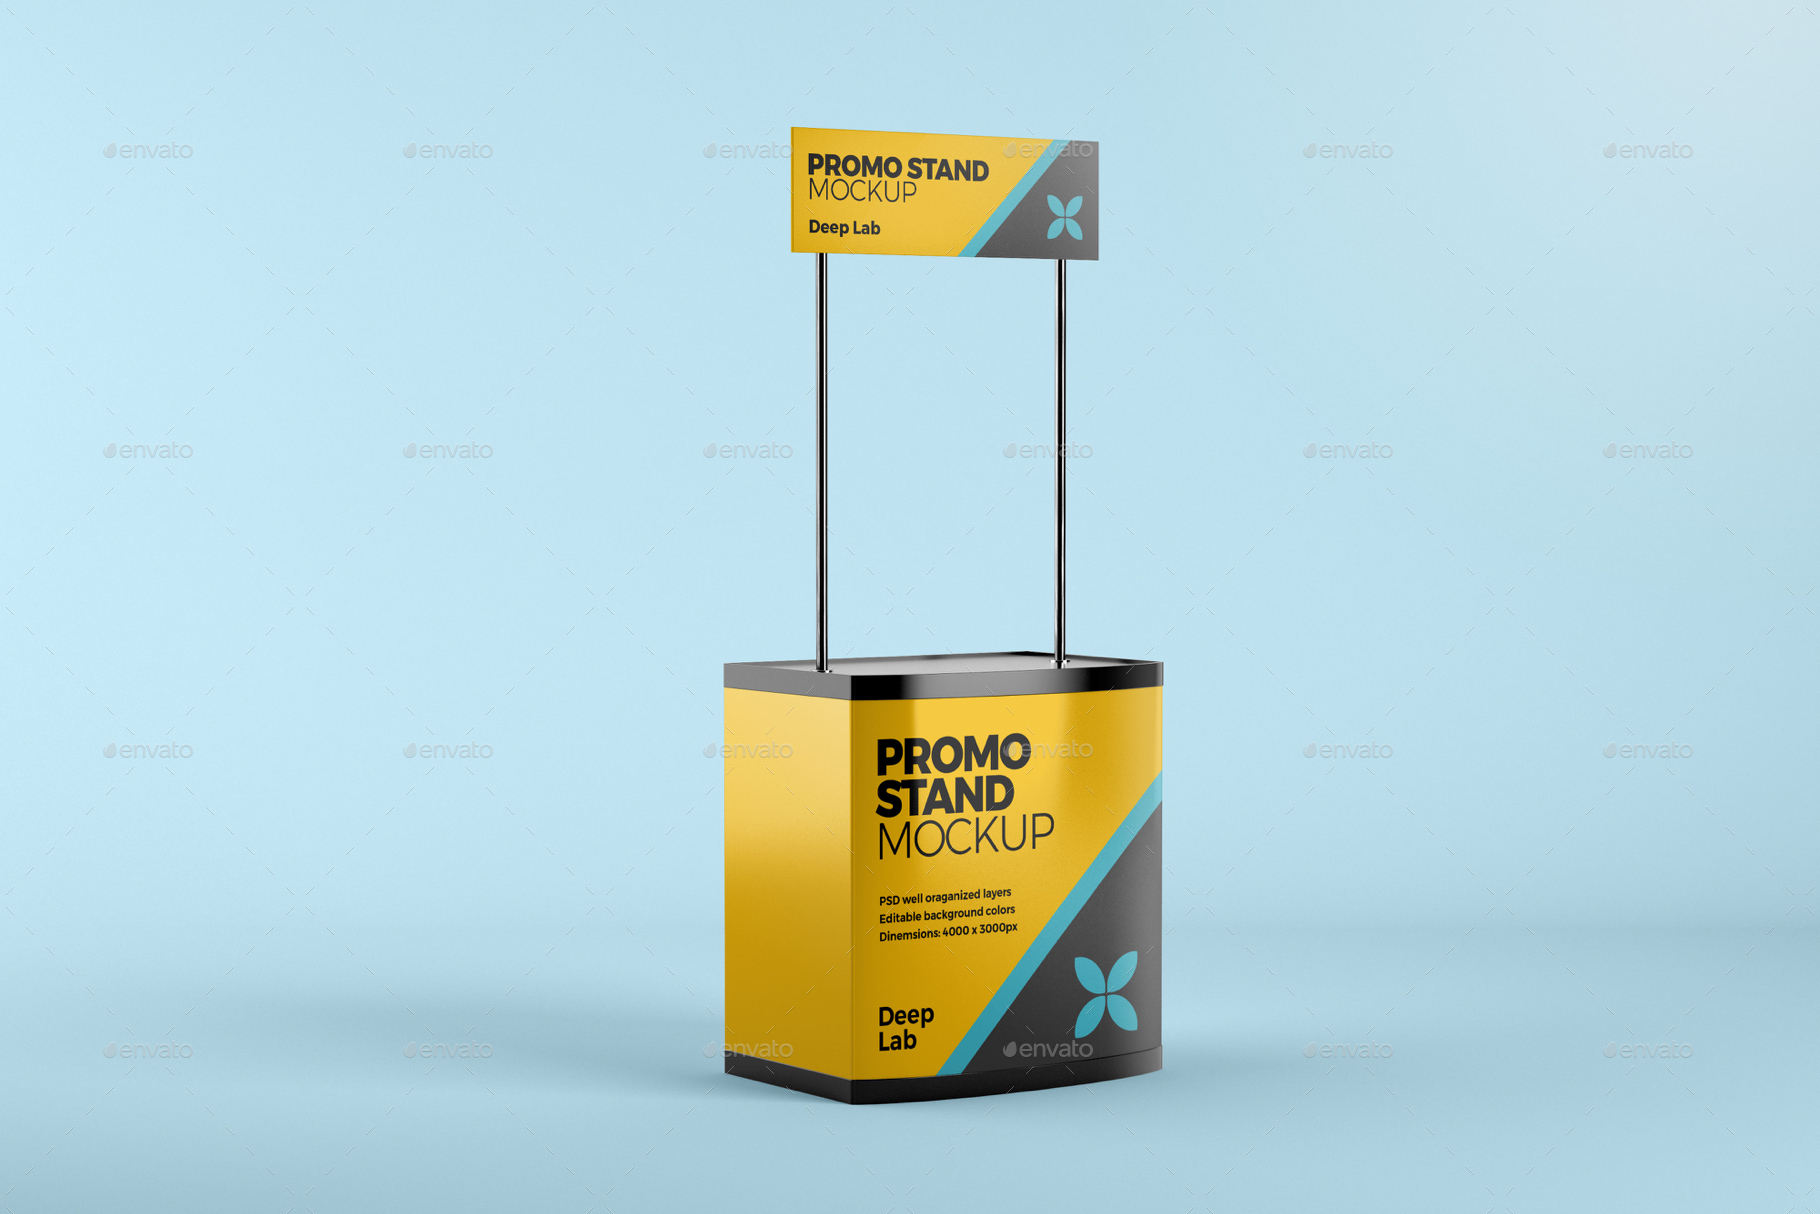 Download Promo Stand Mockup Set by deeplabstudio | GraphicRiver